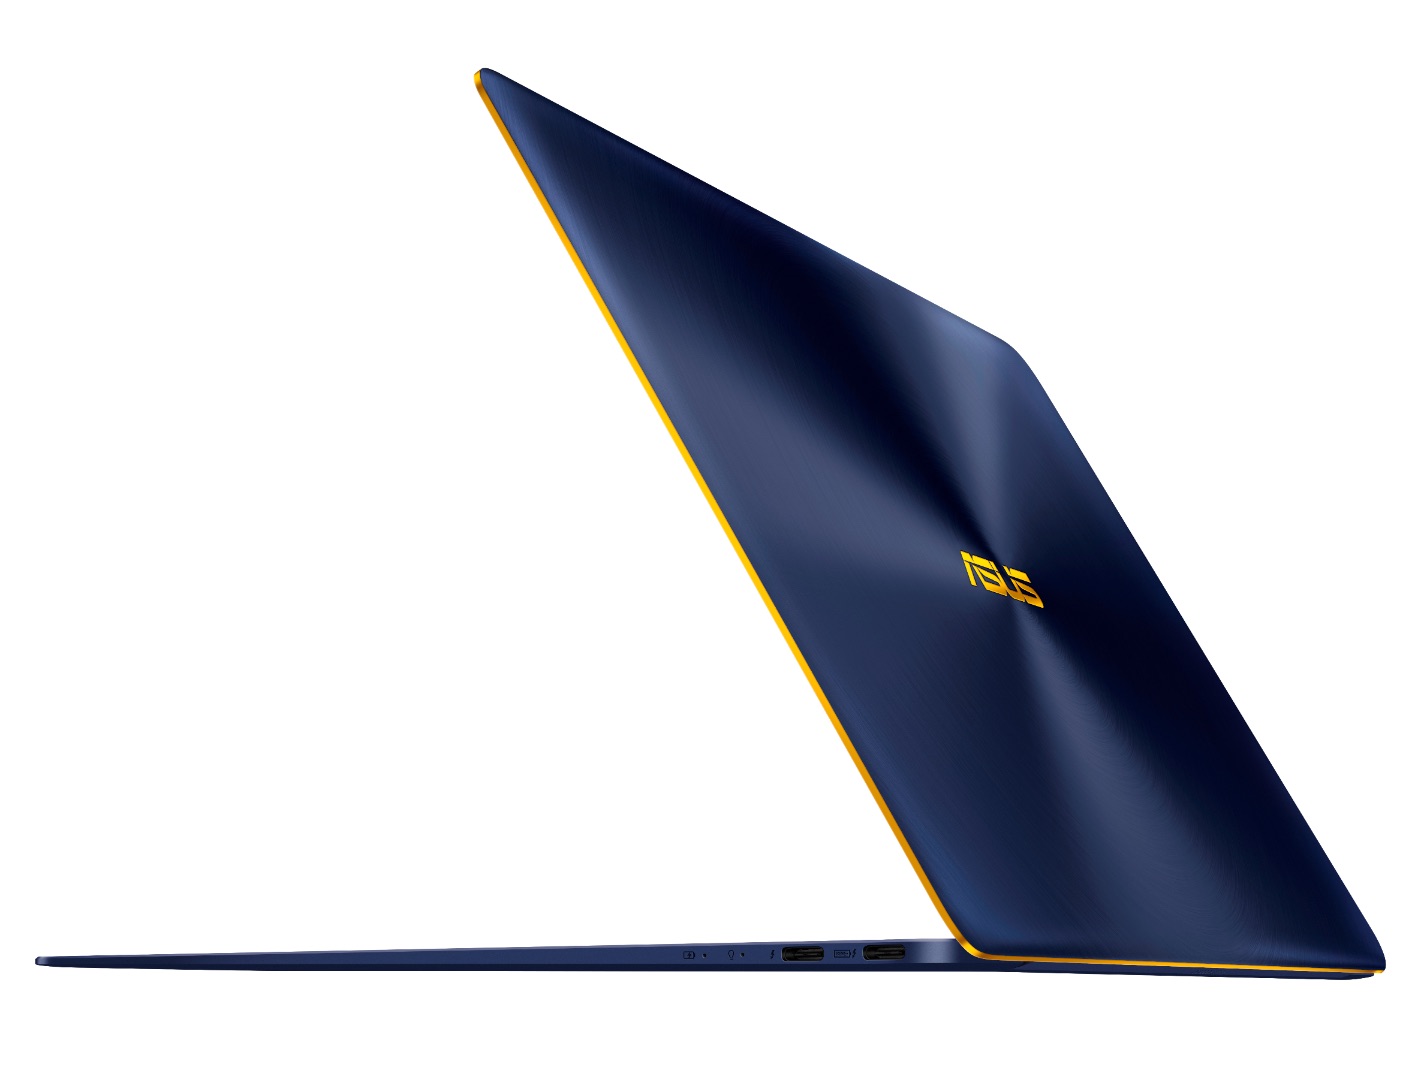 ASUS ZenBook 3 Deluxe UX490 thin bezel display aerospace grade alloy unibody design